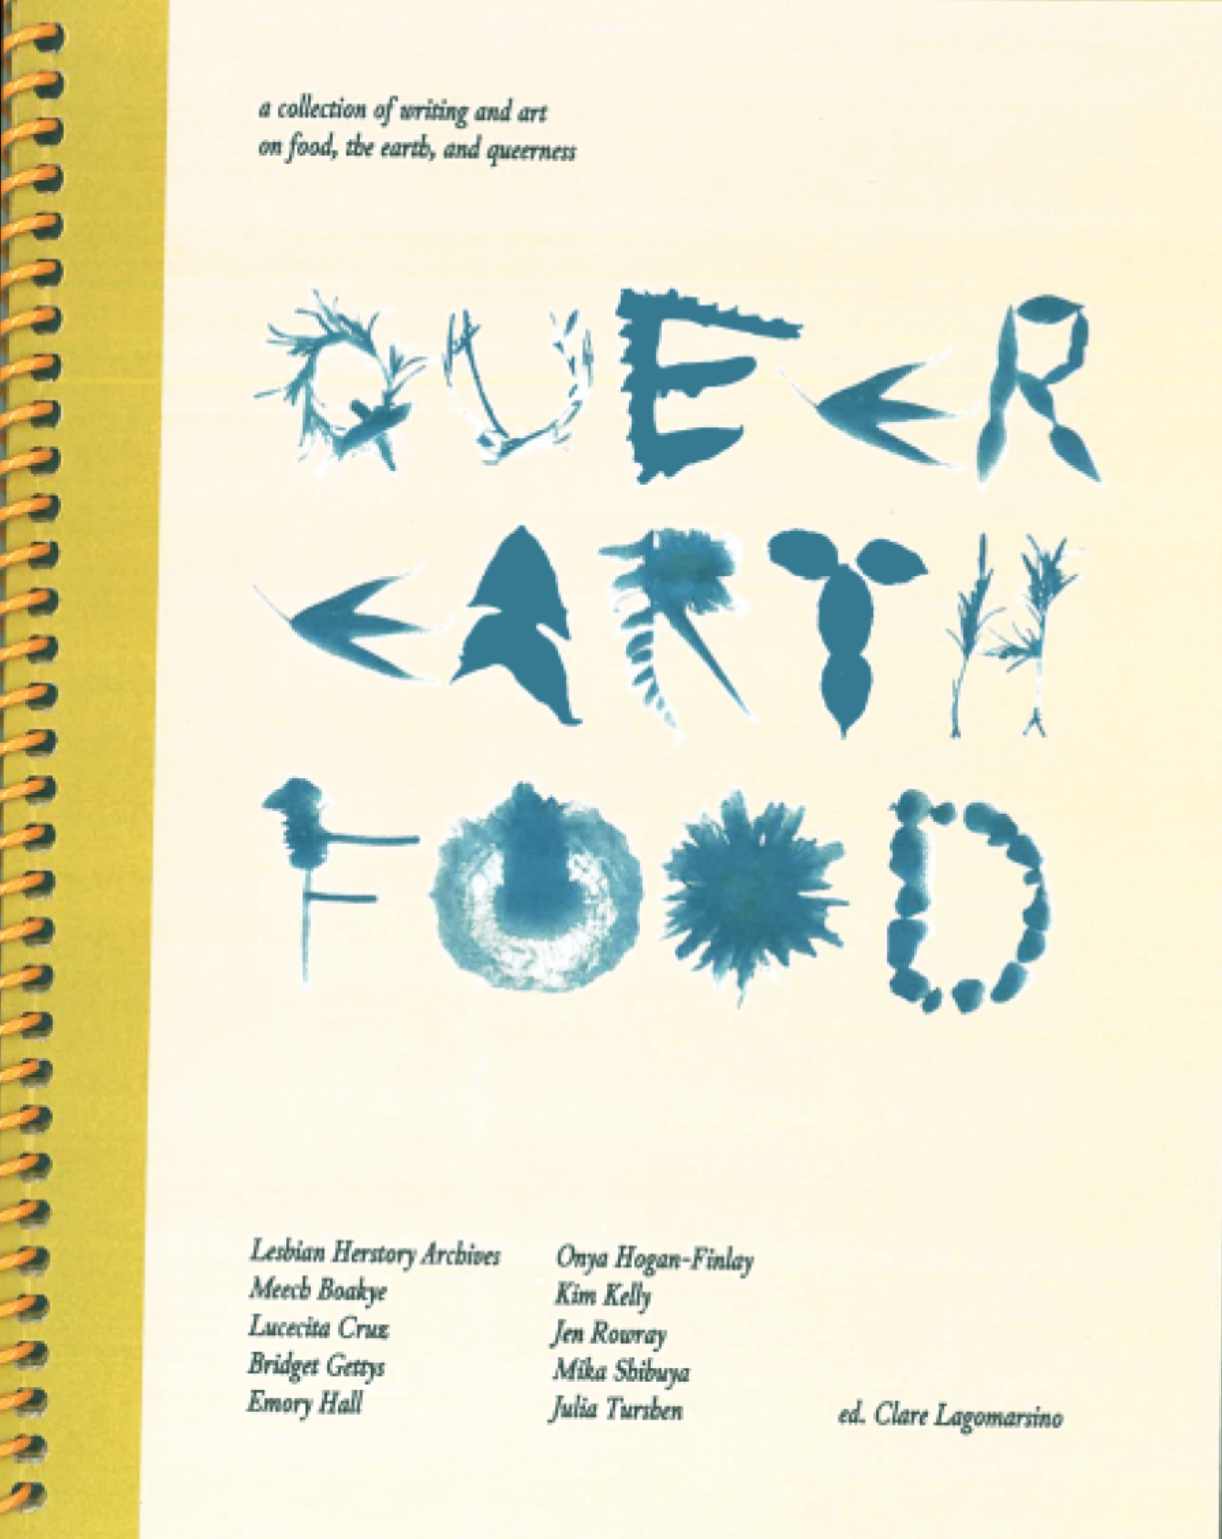 Queer Earth Food Clare Lagomarsino